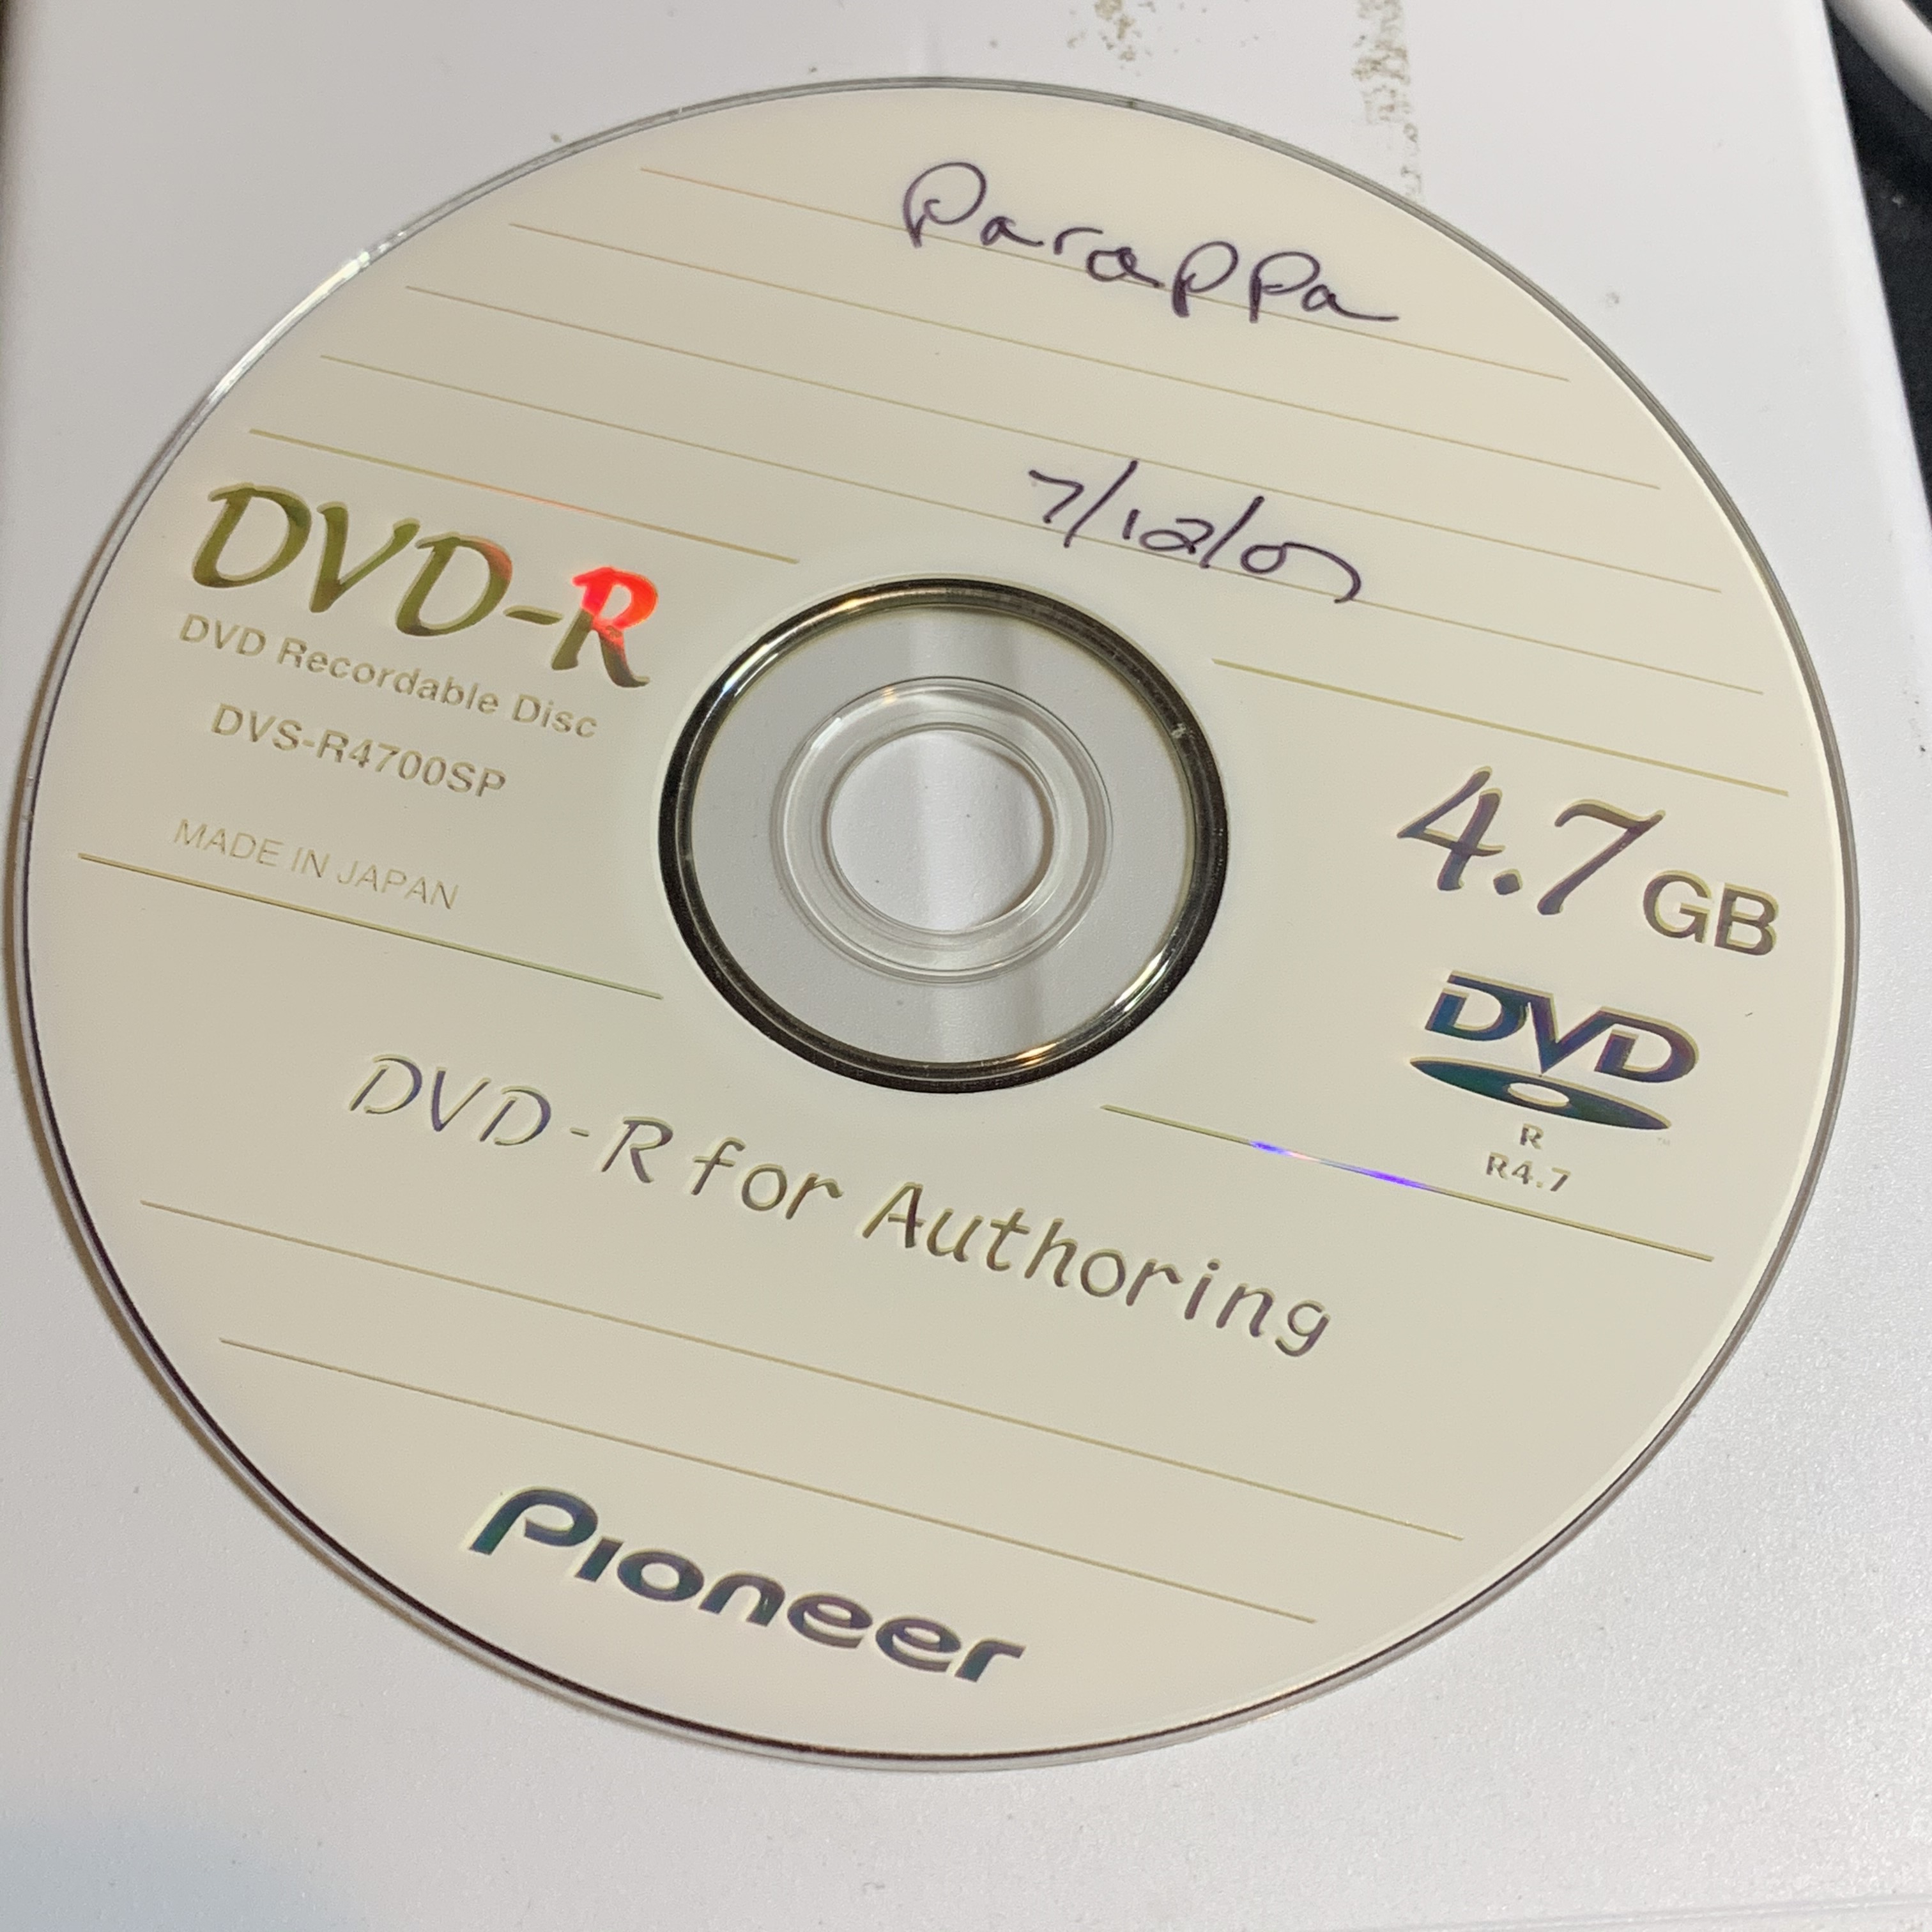 Parappa the Rapper 2 Desktop Accessories CD-ROM : DigiCube, Rodney